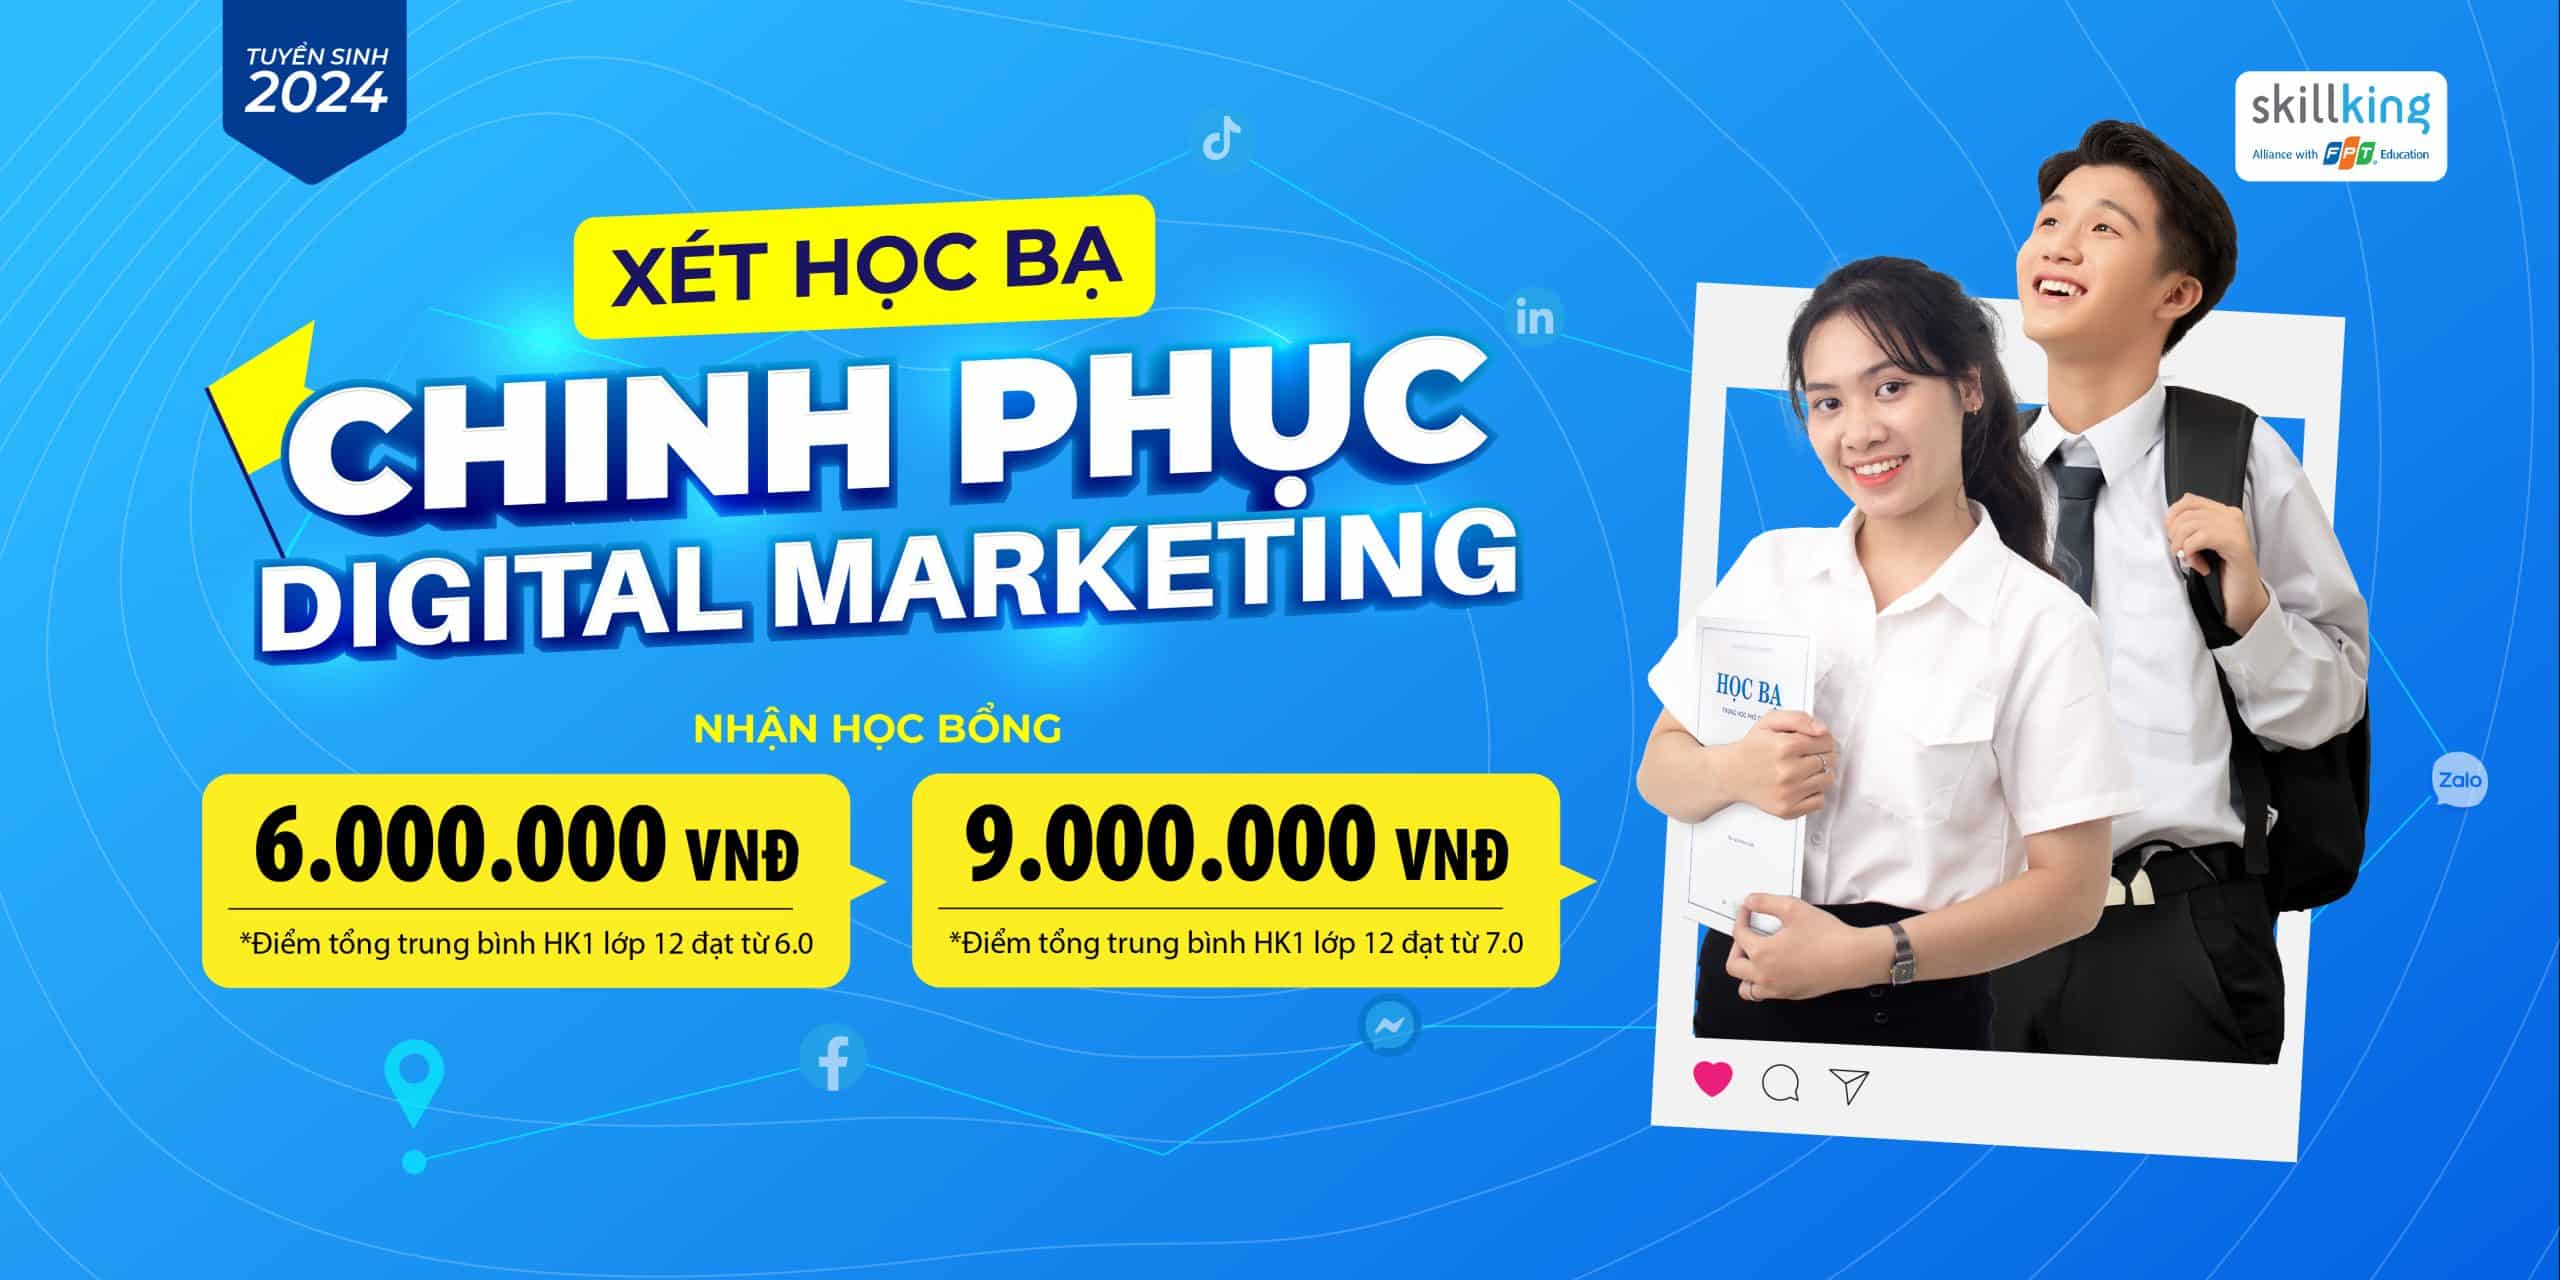 Chinh phuc nganh DM BANNER WEB scaled